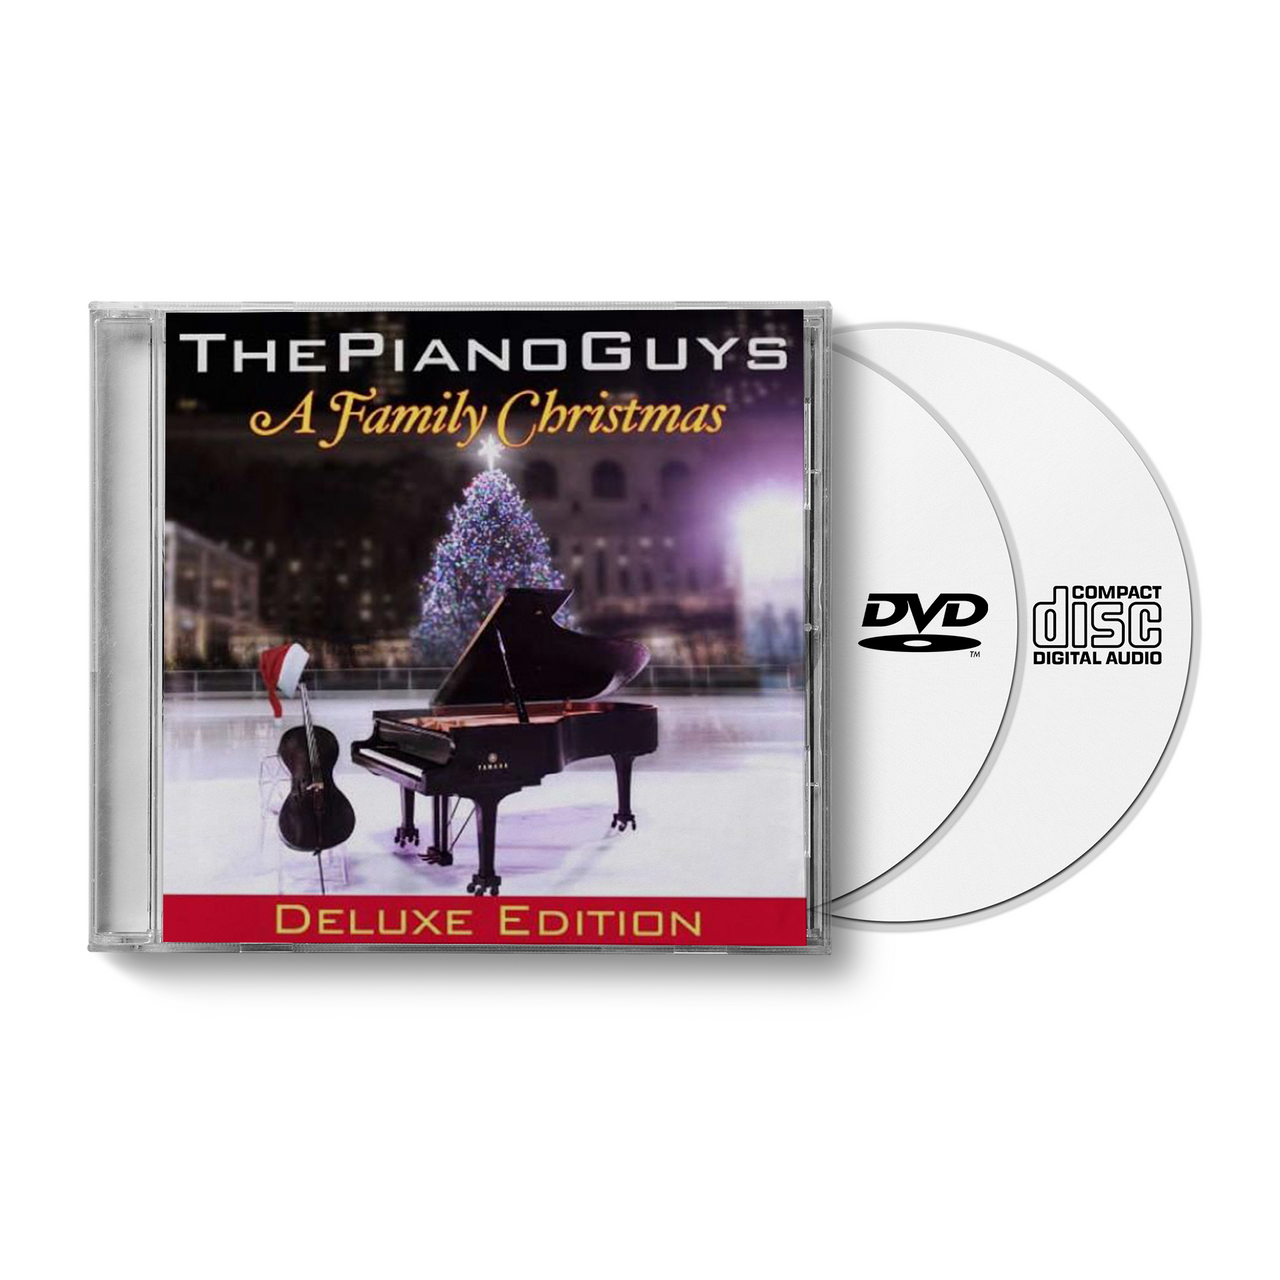 The Piano Guys "A Family Christmas"